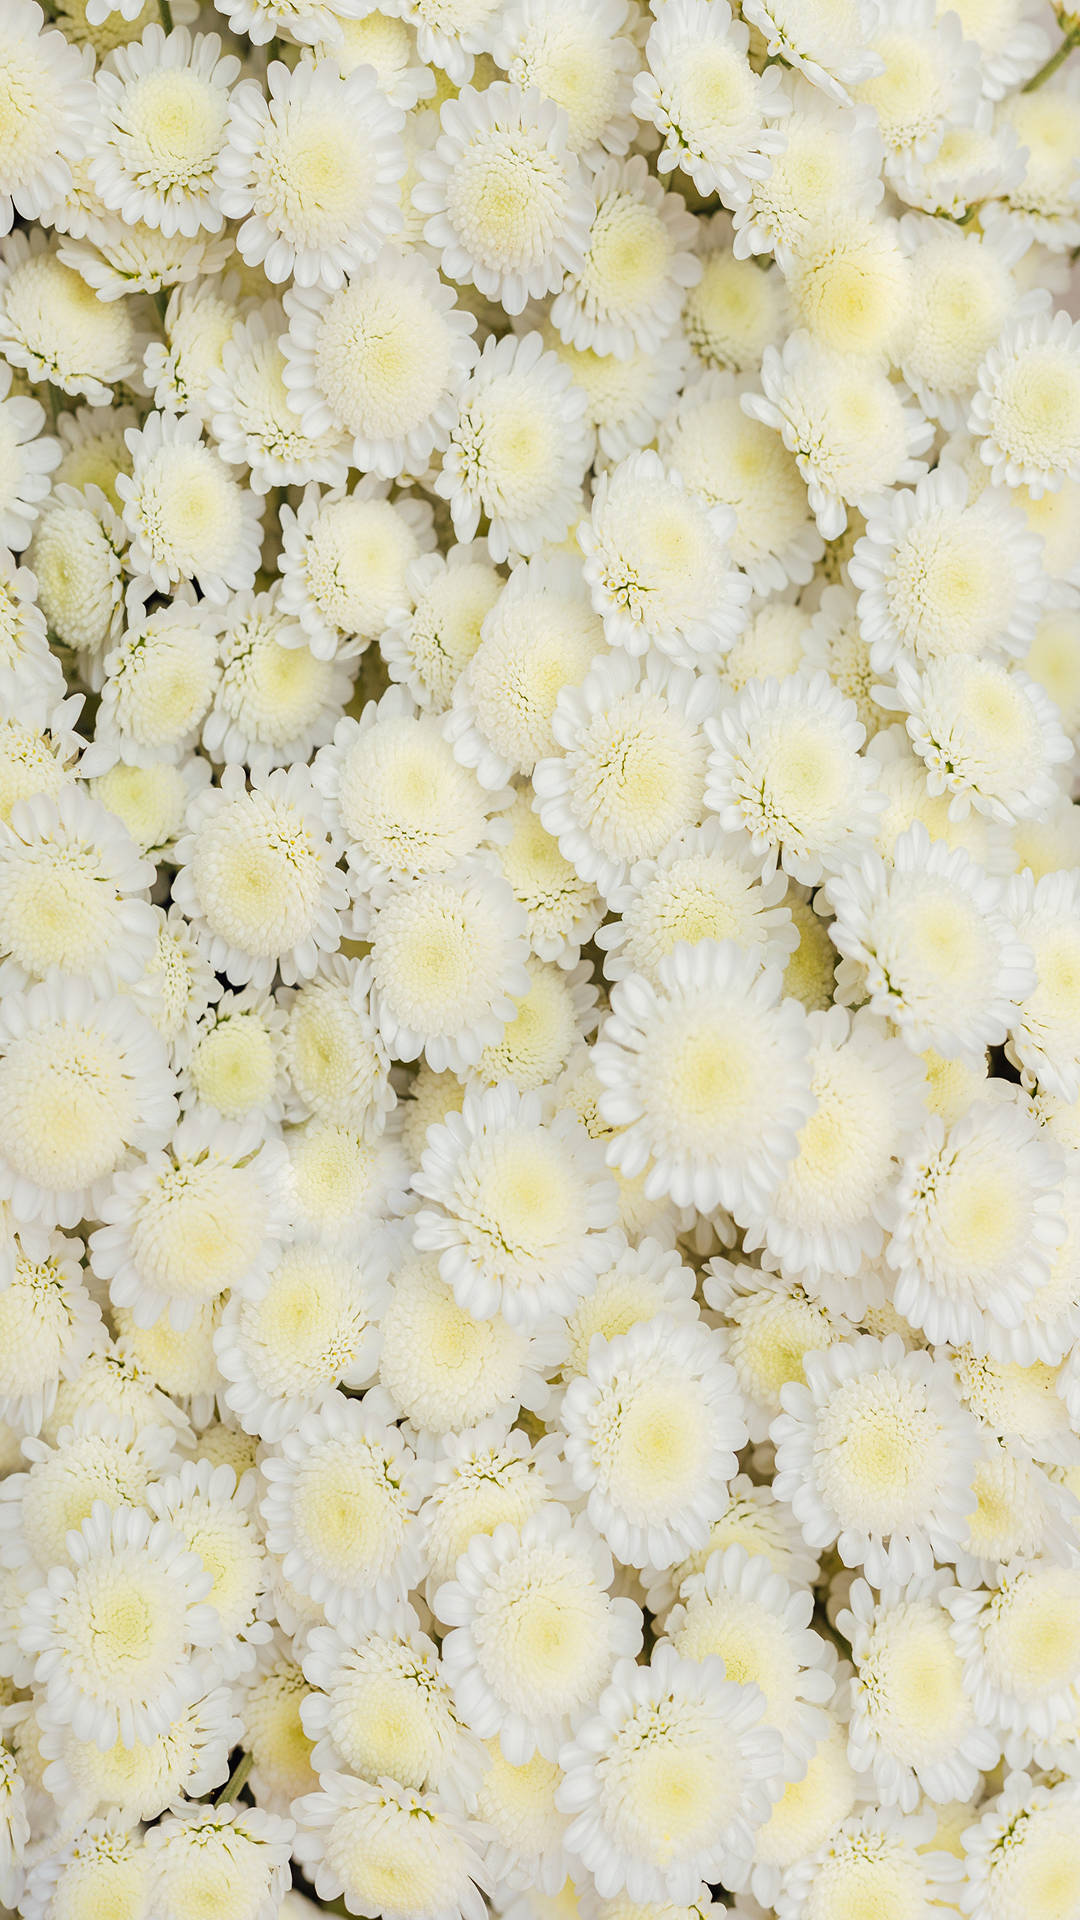 Instagram Story Hybrid White Daisy Flowers